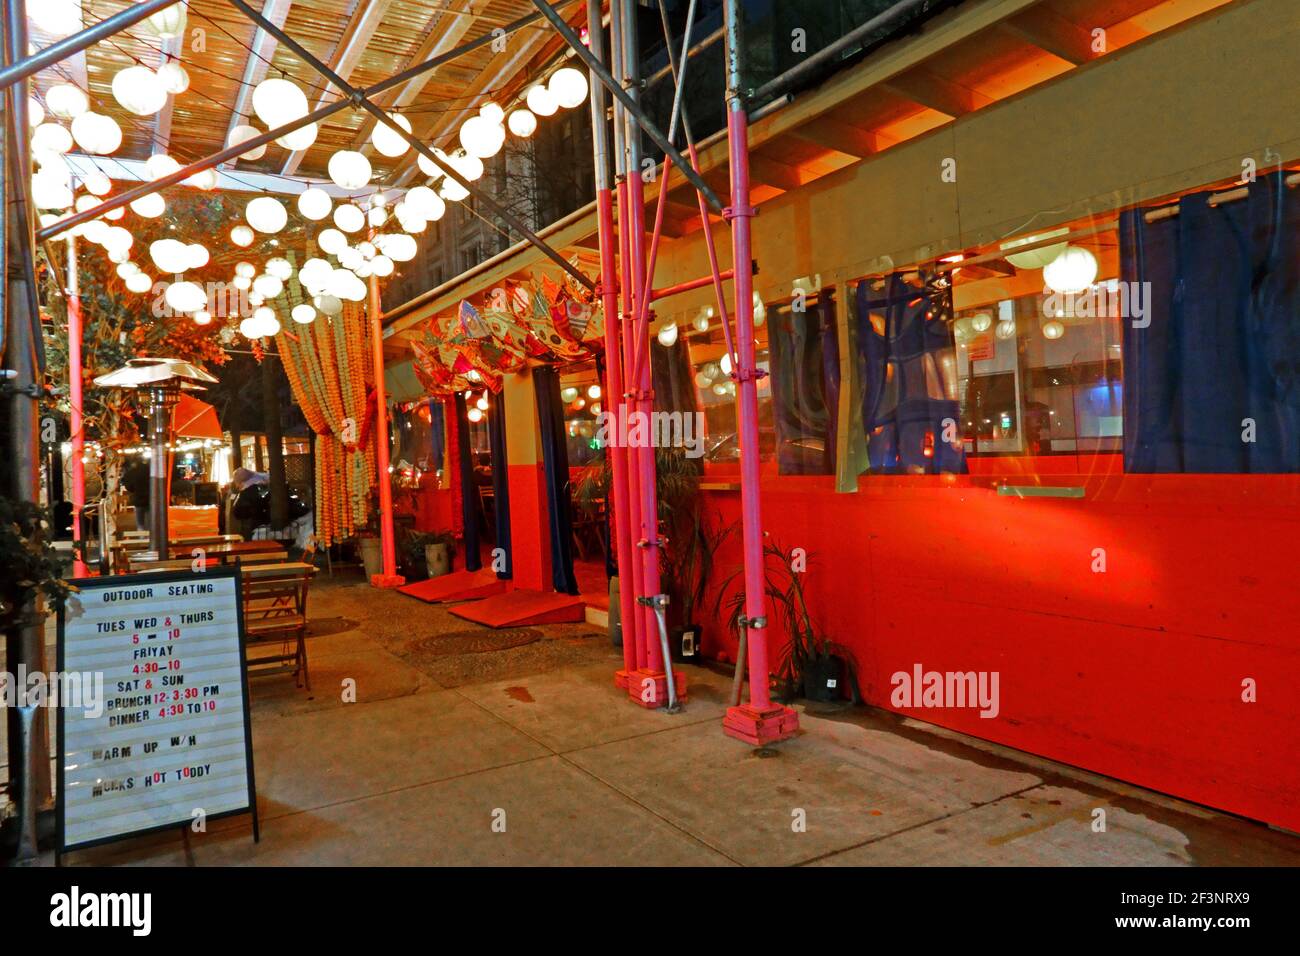 Indian restaurant outdoor dining shelter, Manhattan, New York Stock Photo